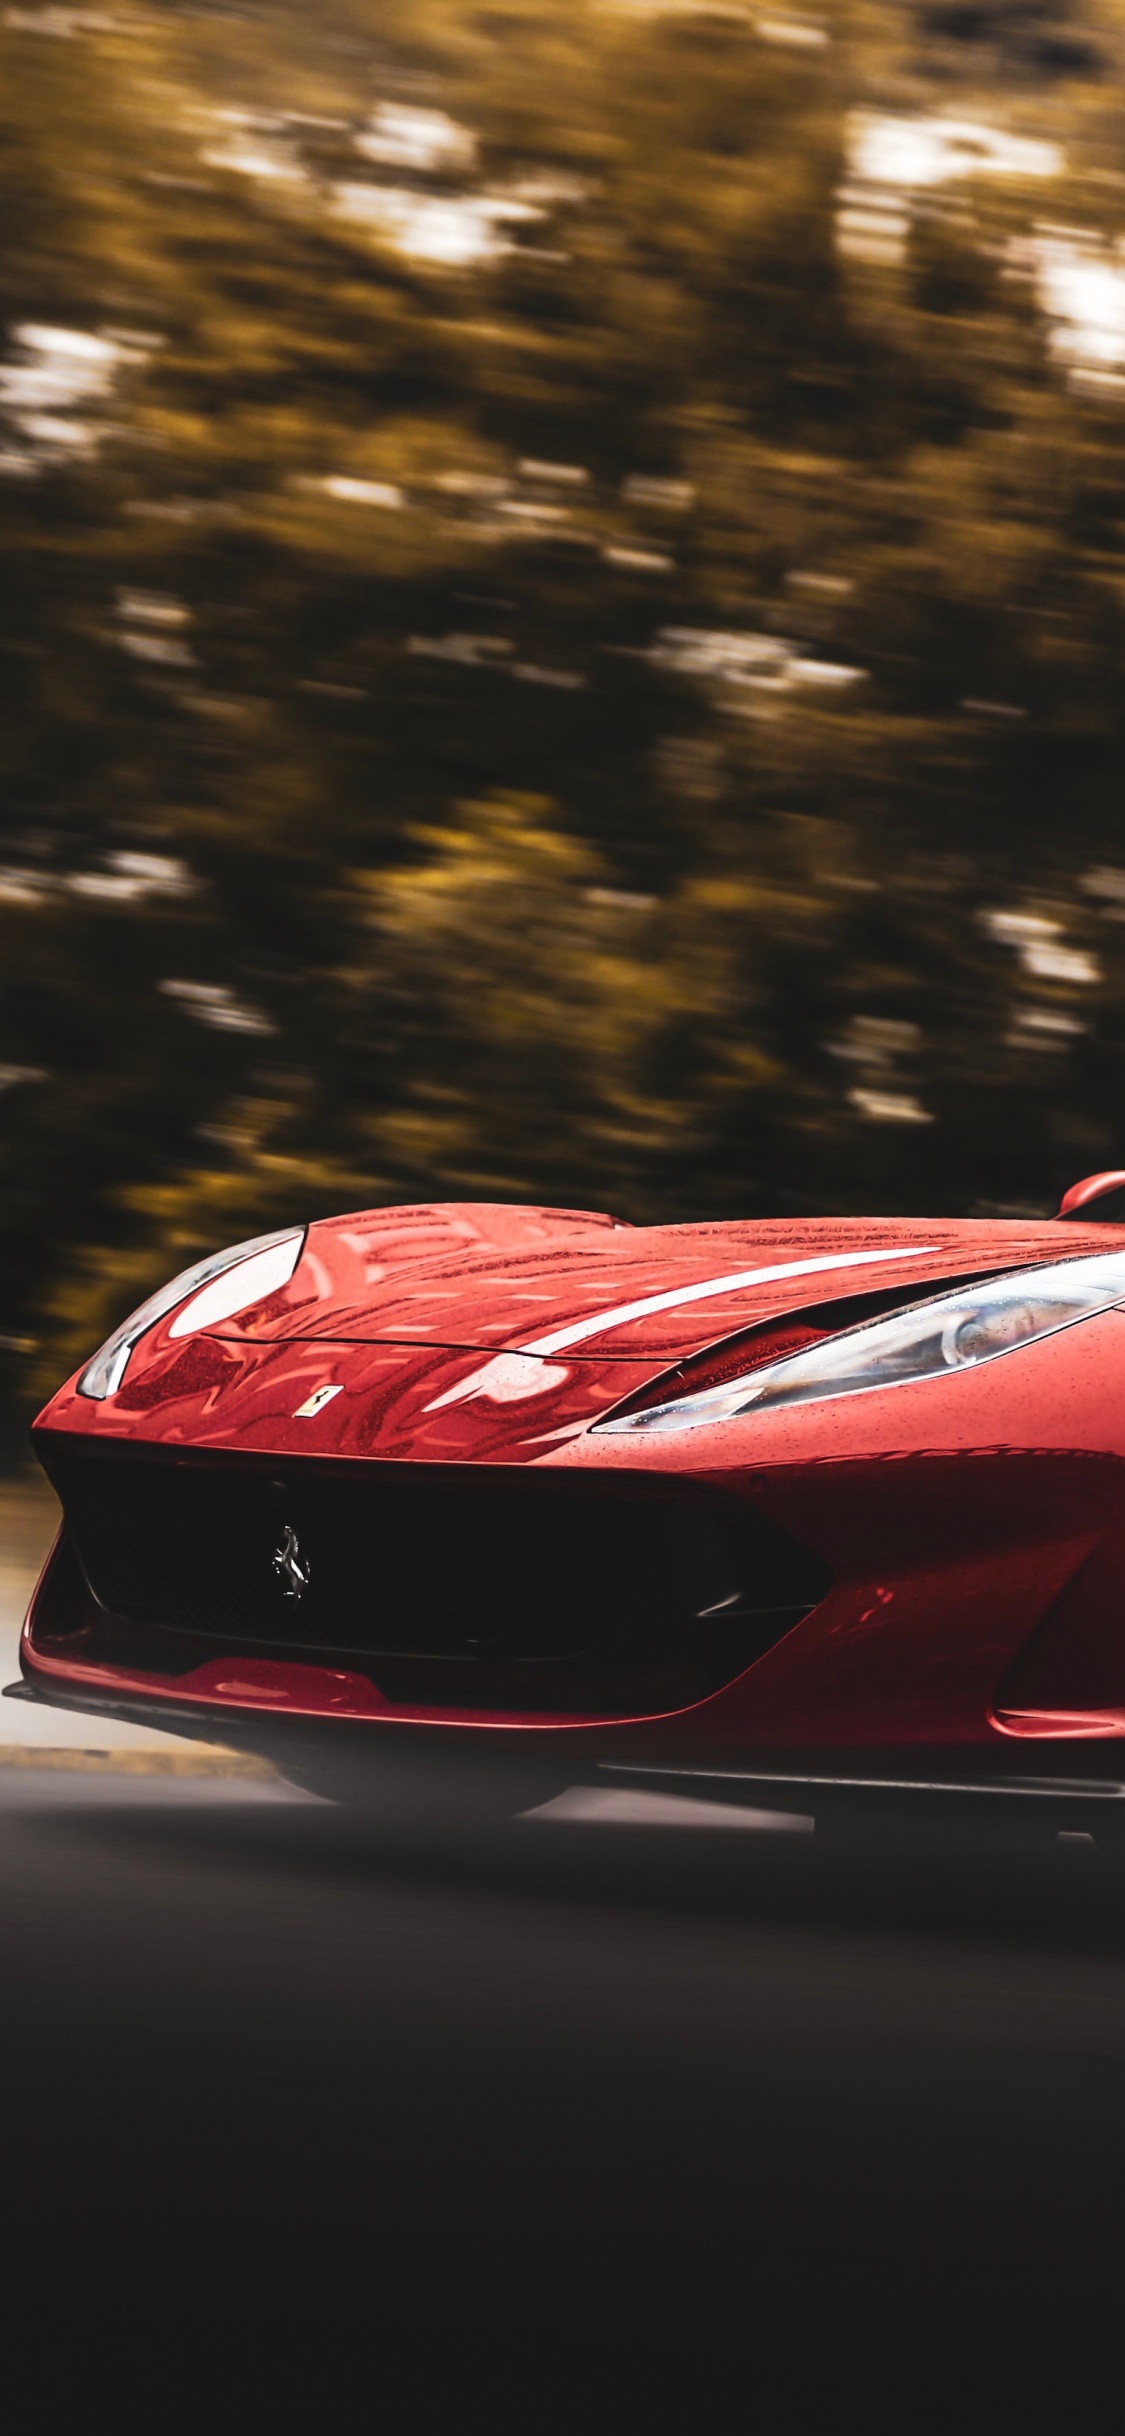 Red Ferrari 458 Italia on Road During Daytime. Wallpaper in 1125x2436 Resolution